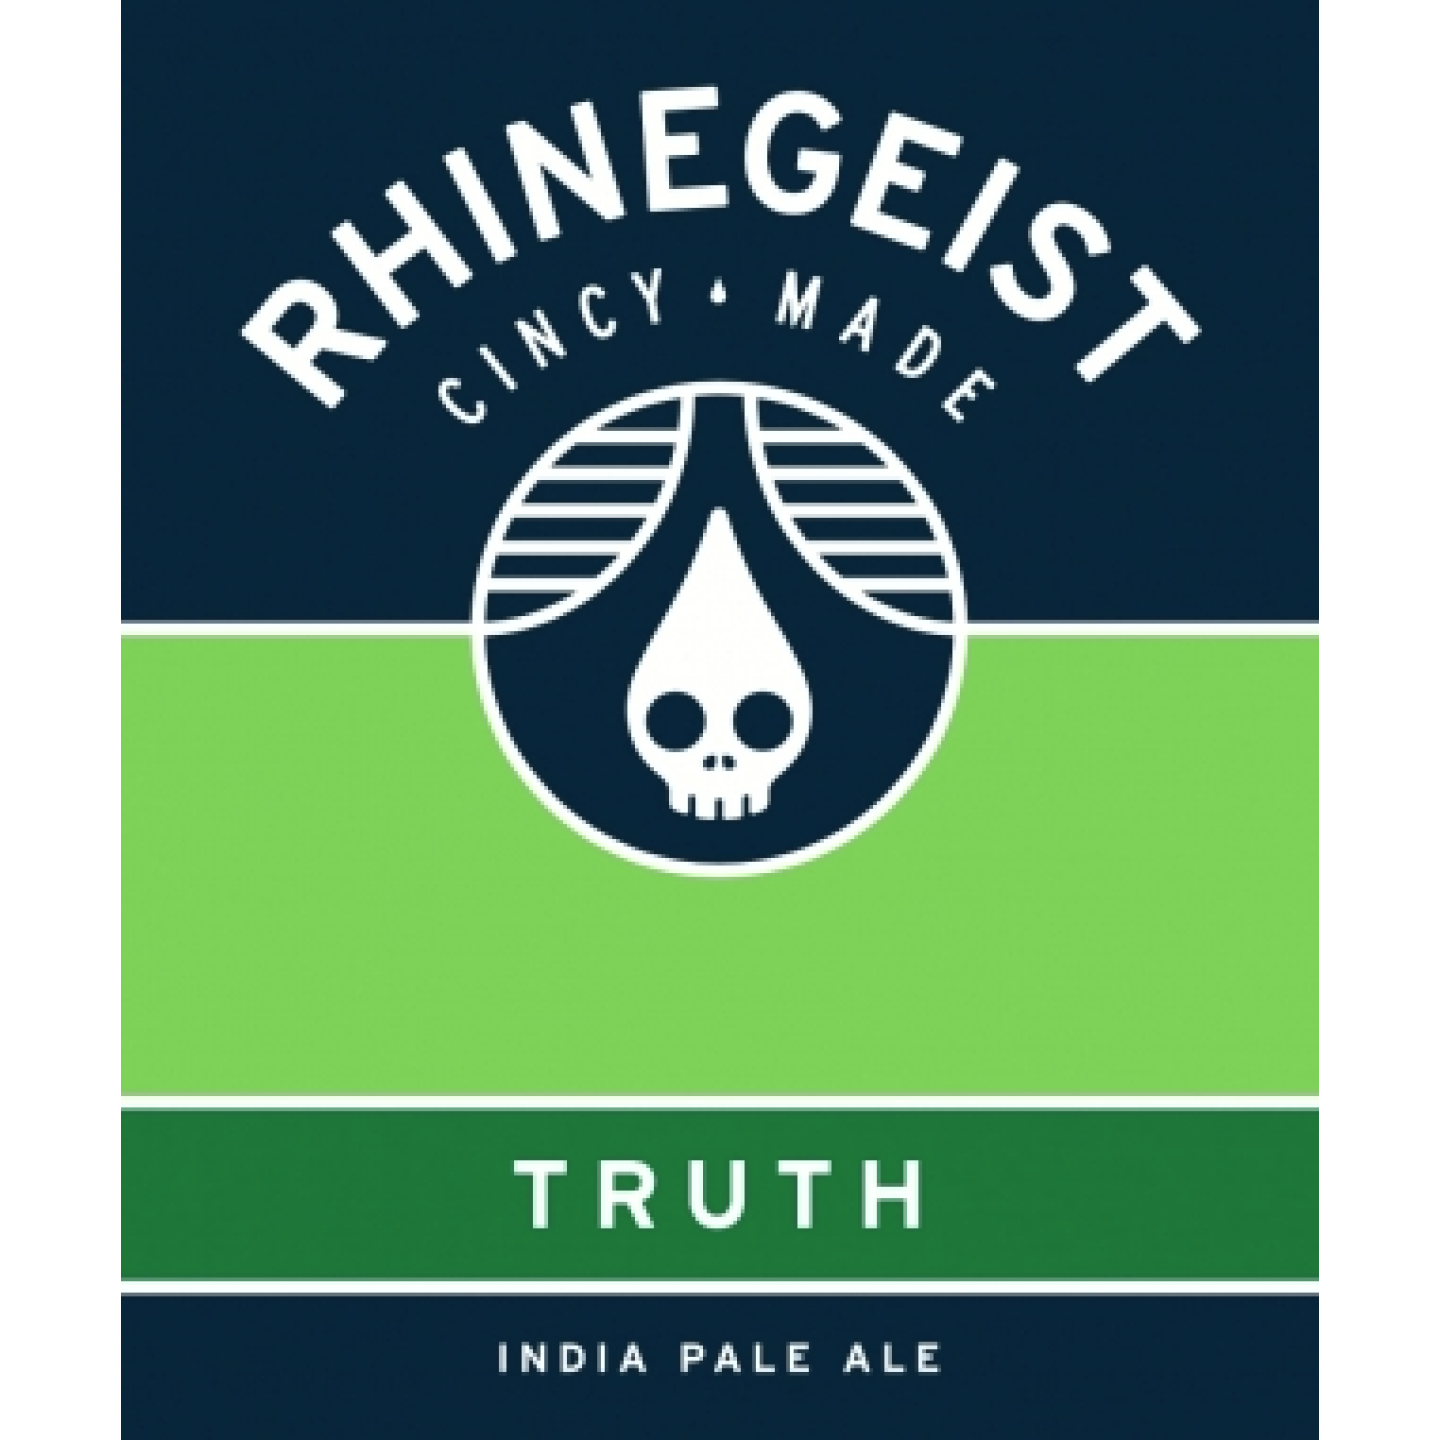 Rhinegeist Brewery Image 6